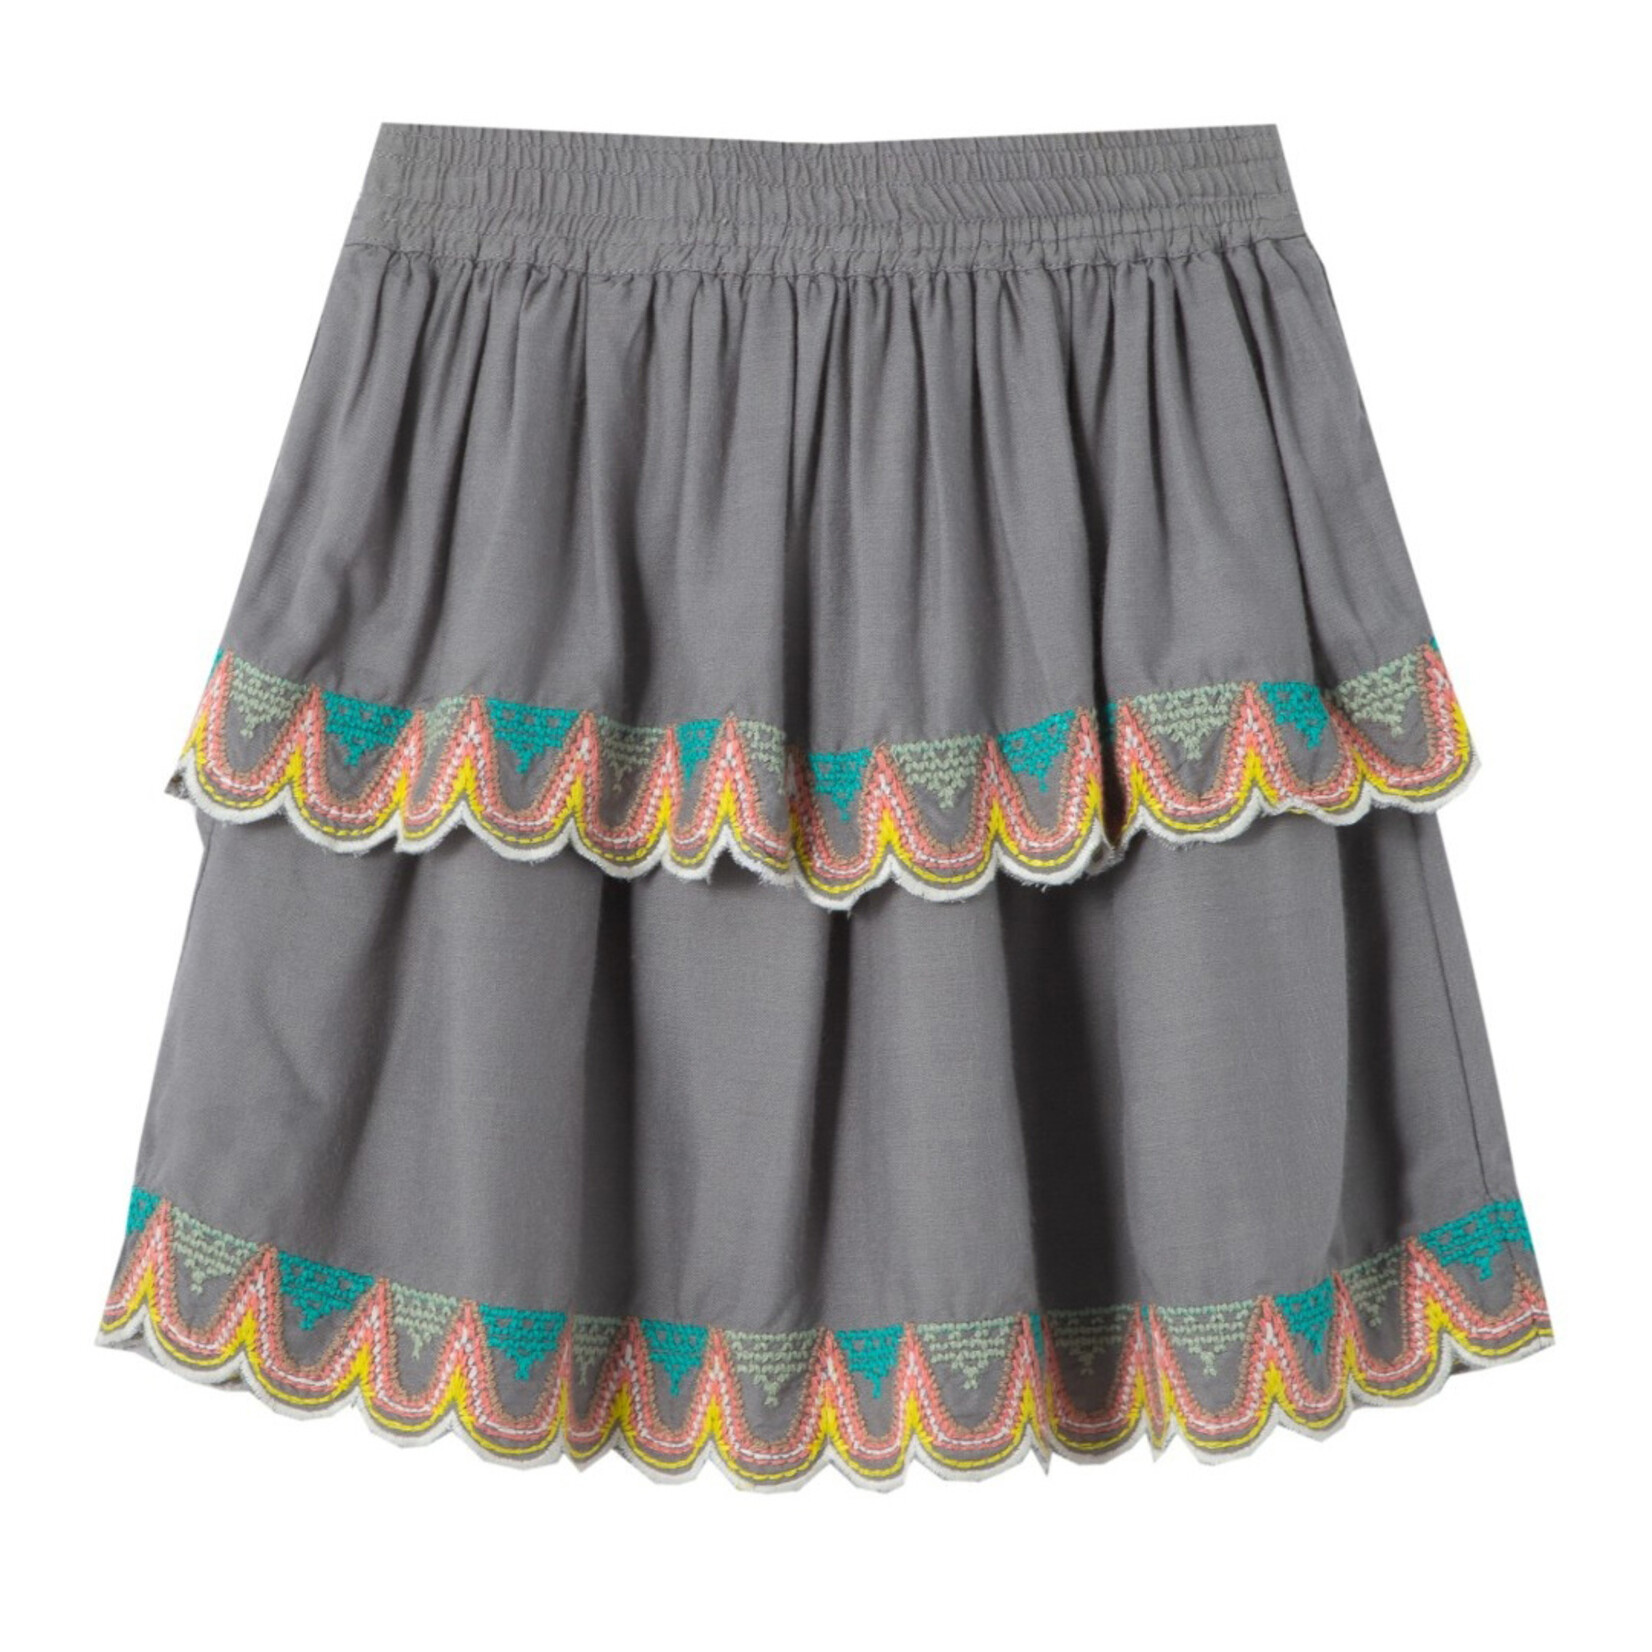 Peek Aren't You Curious Embroidered Ruffle Skirt